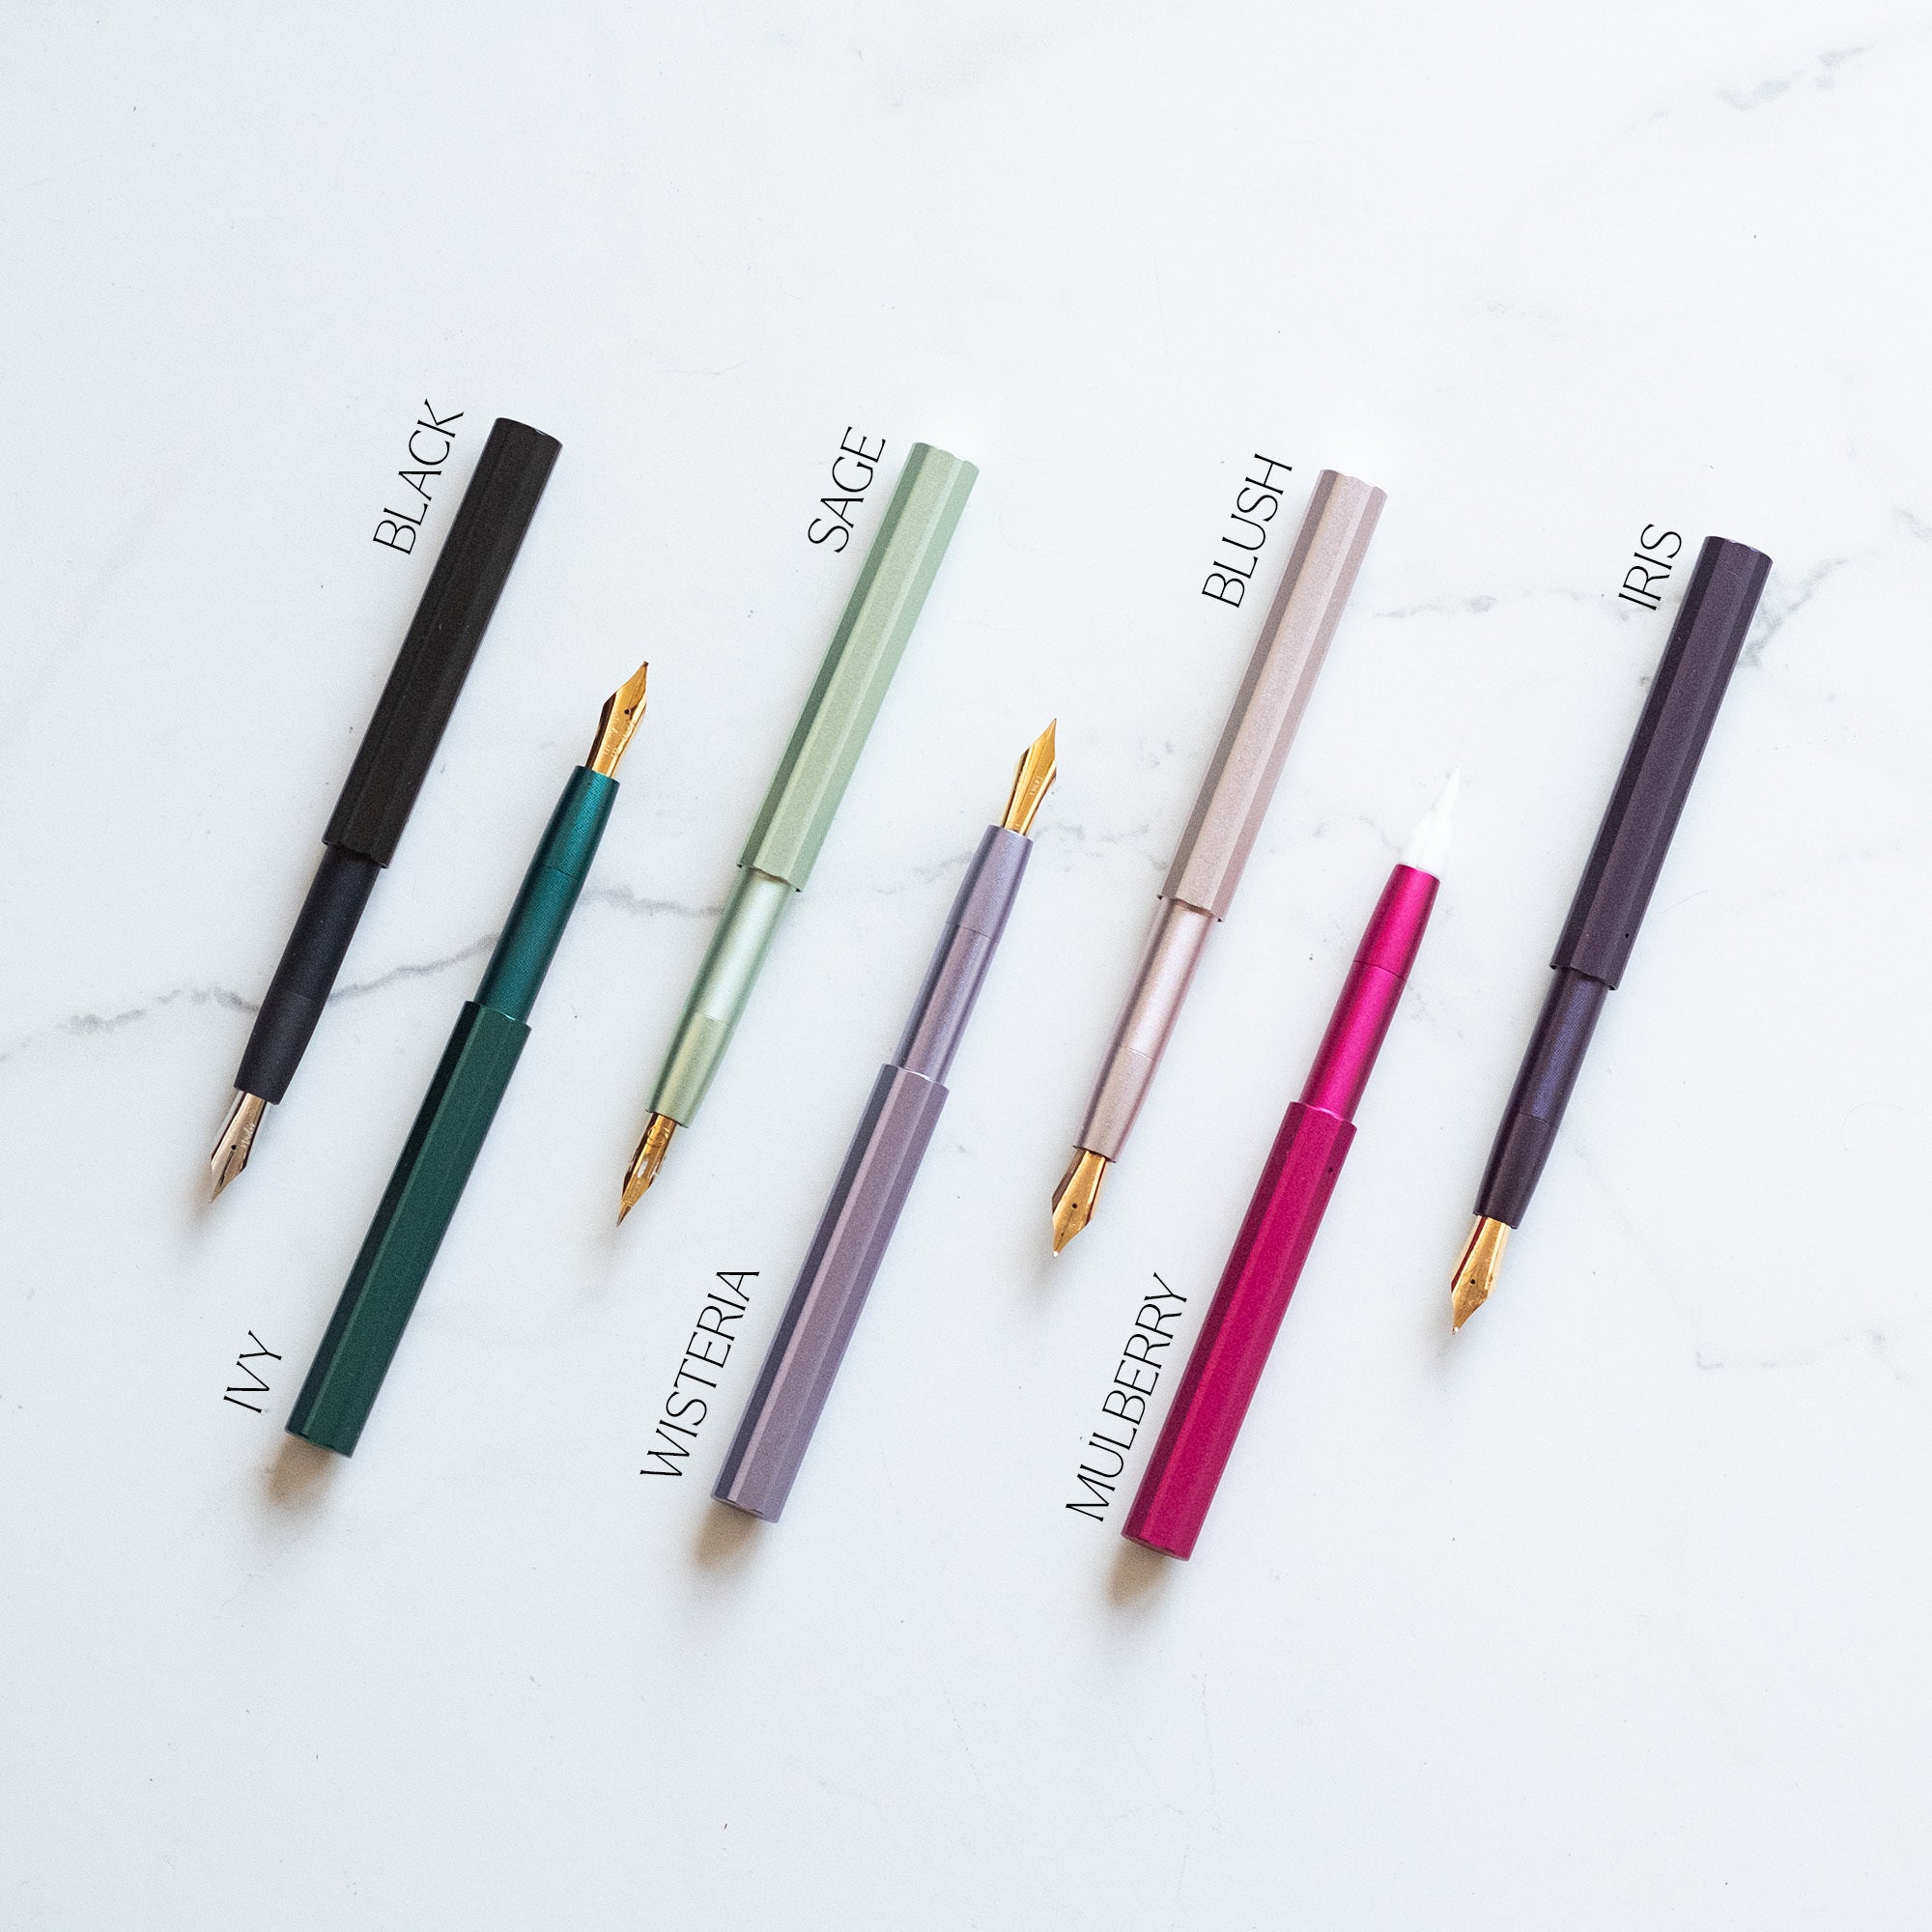 The pocket fountain pen with colour names